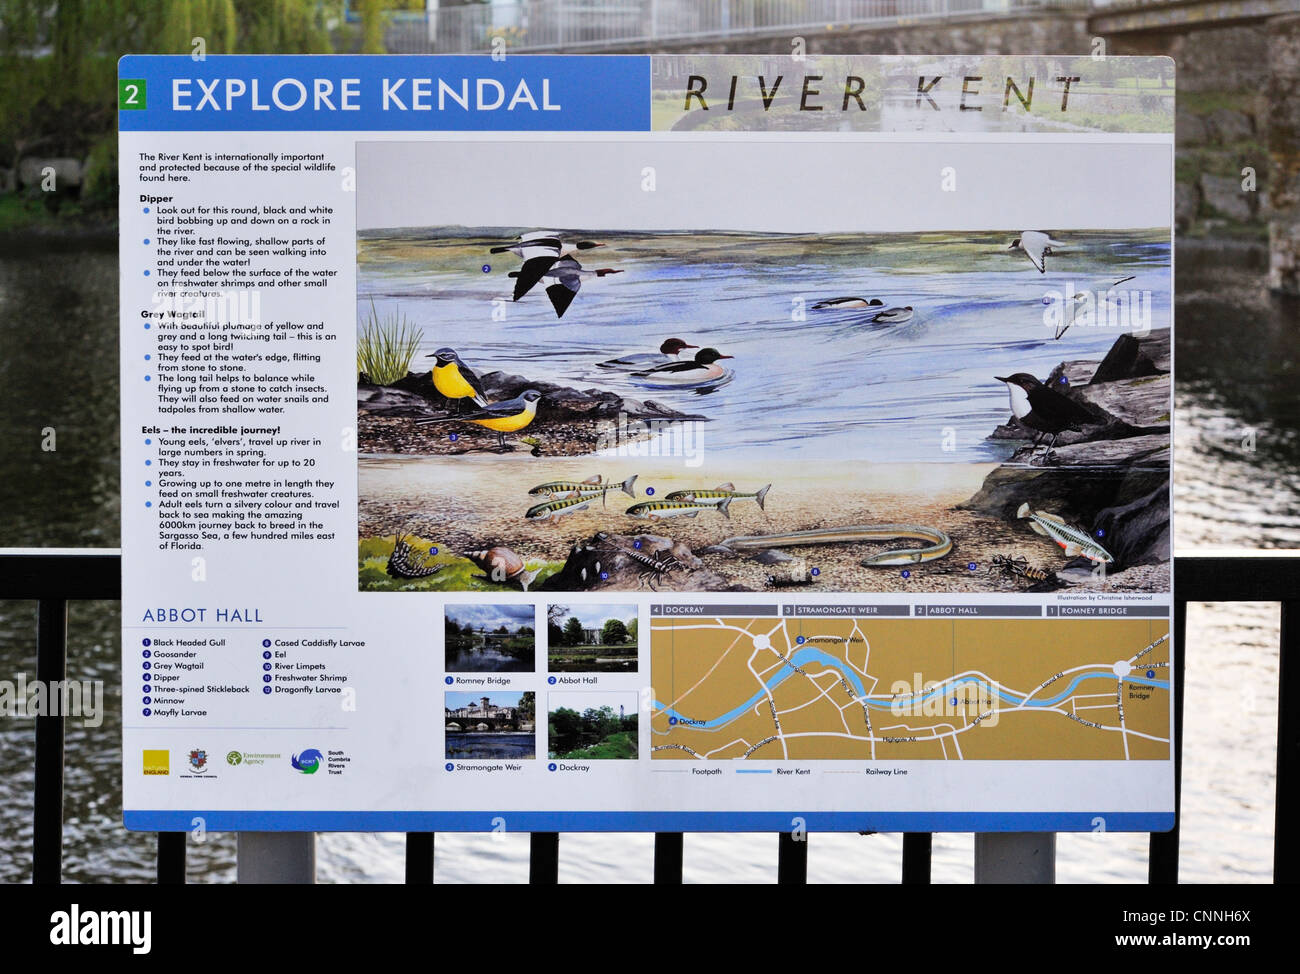 Explore Kendal. River Kent, Information Board 2. Abbot Hall, Kendal, Cumbria, England, United Kingdom, Europe. Stock Photo